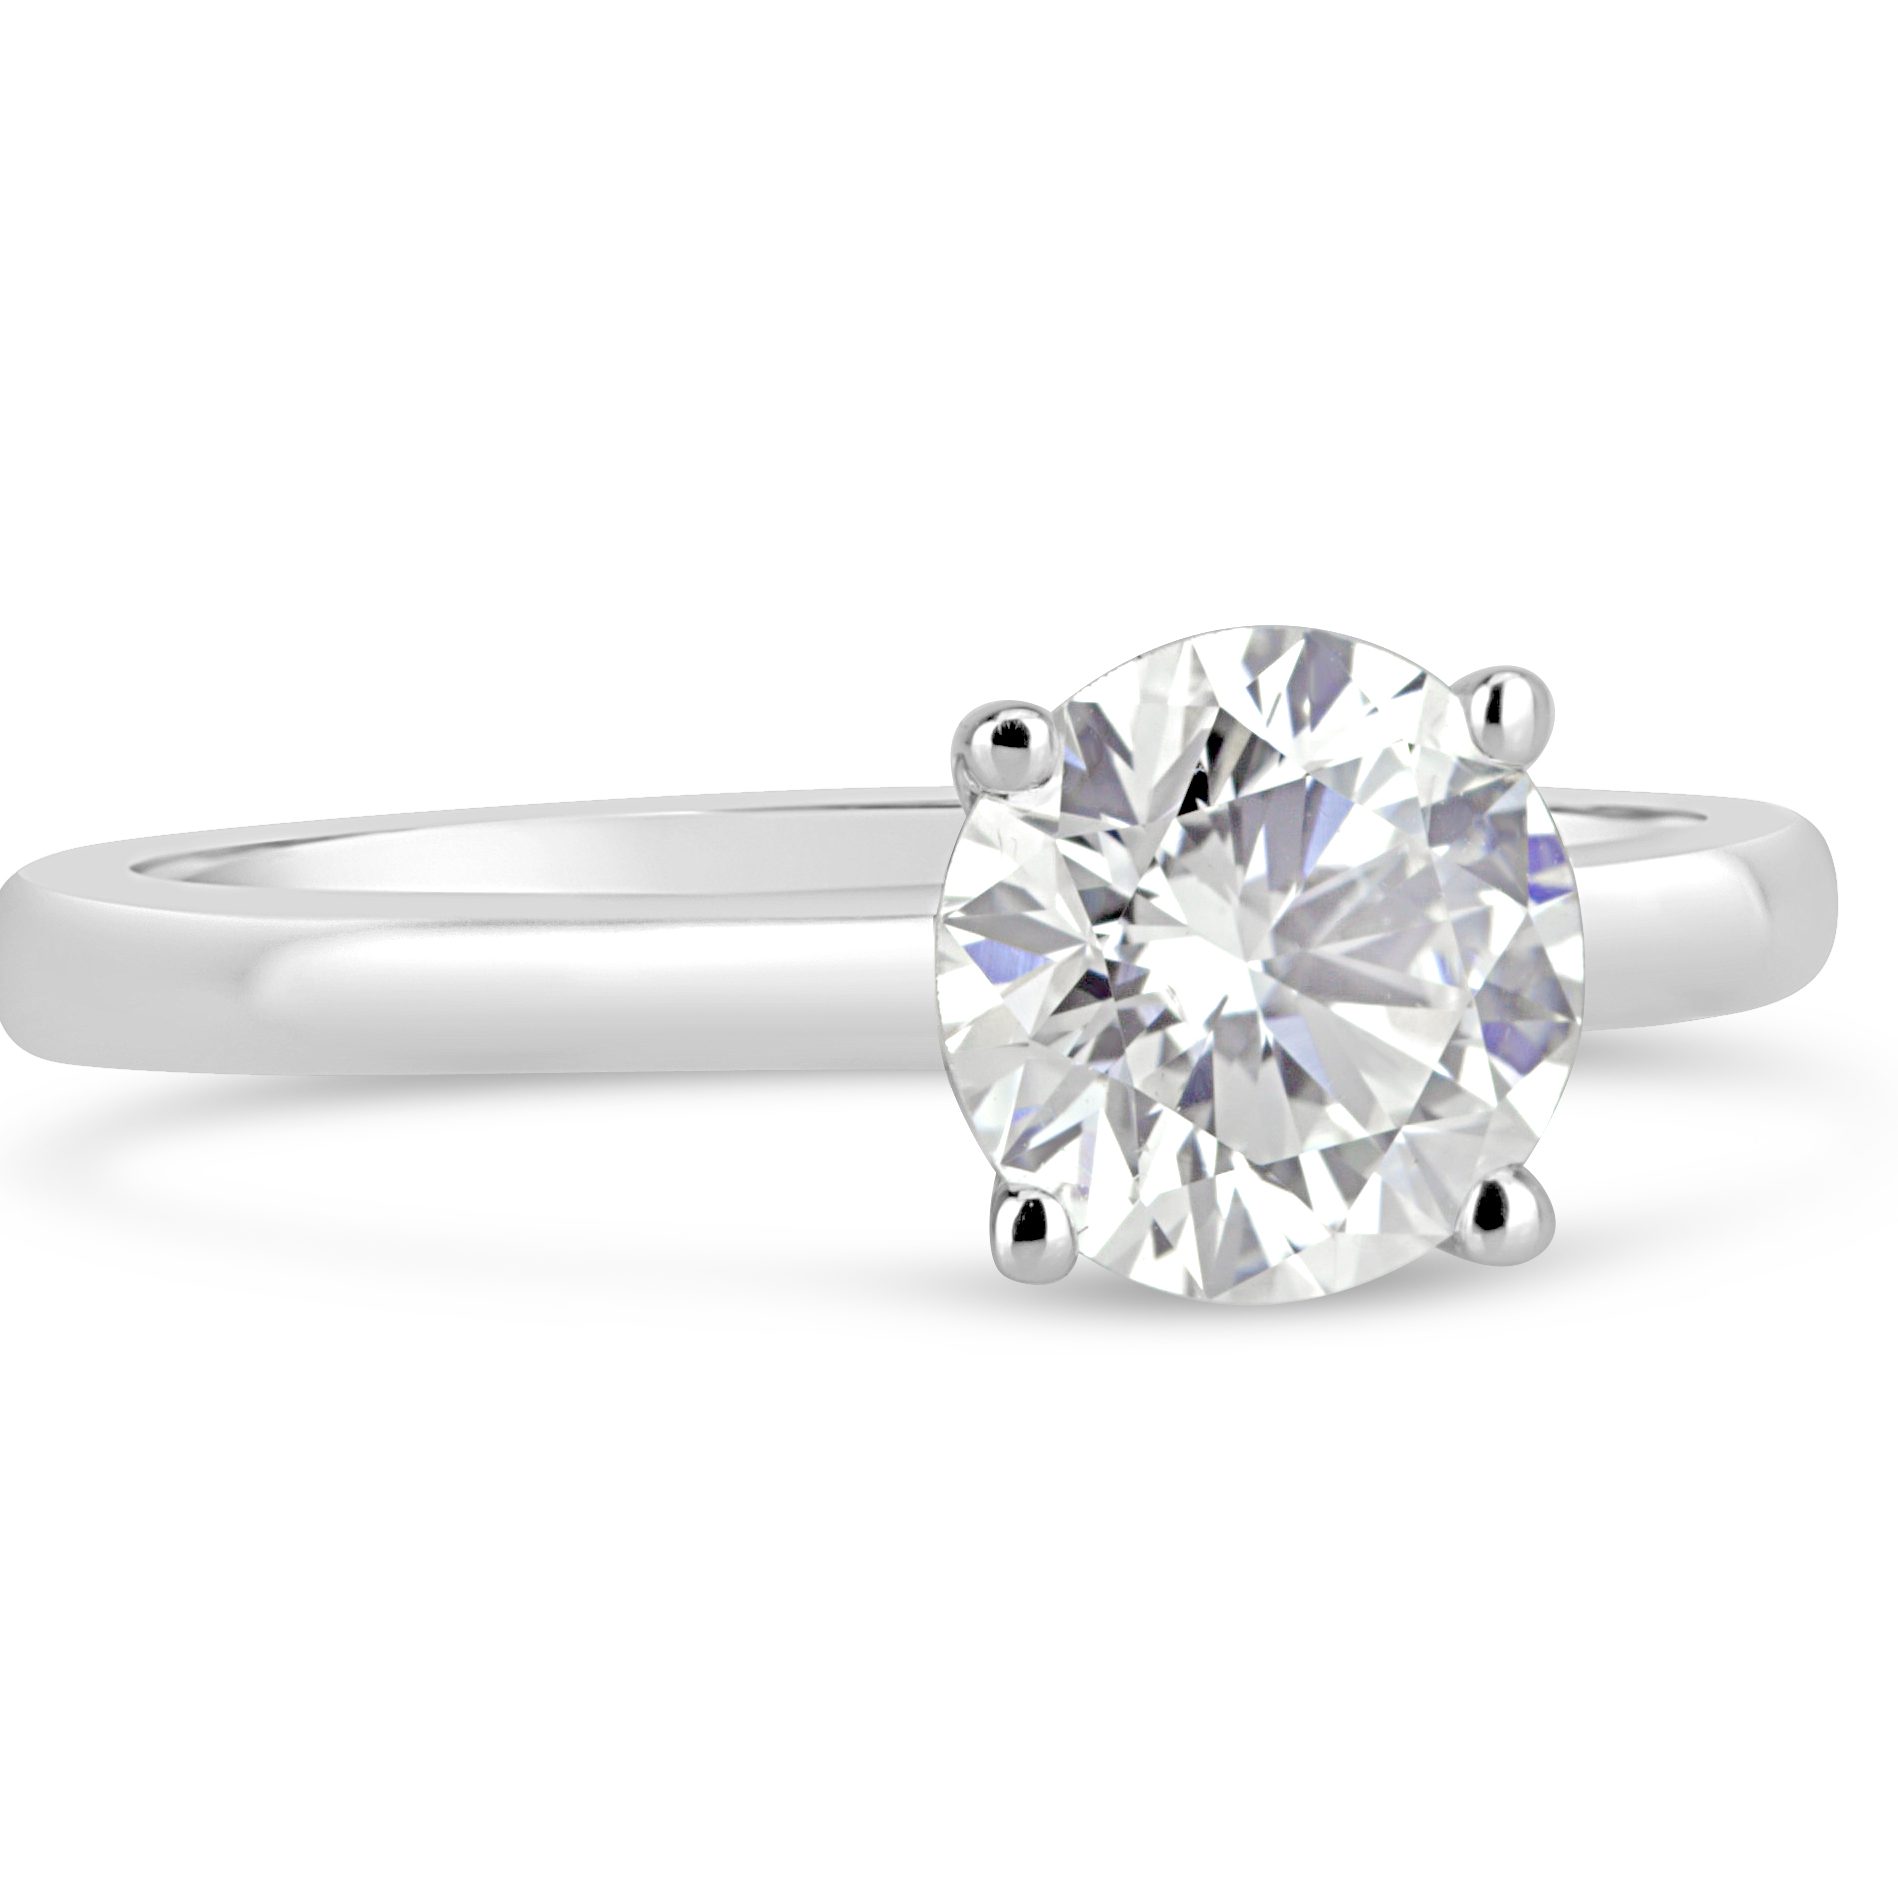 14k white gold round diamond solitaire engagement ring